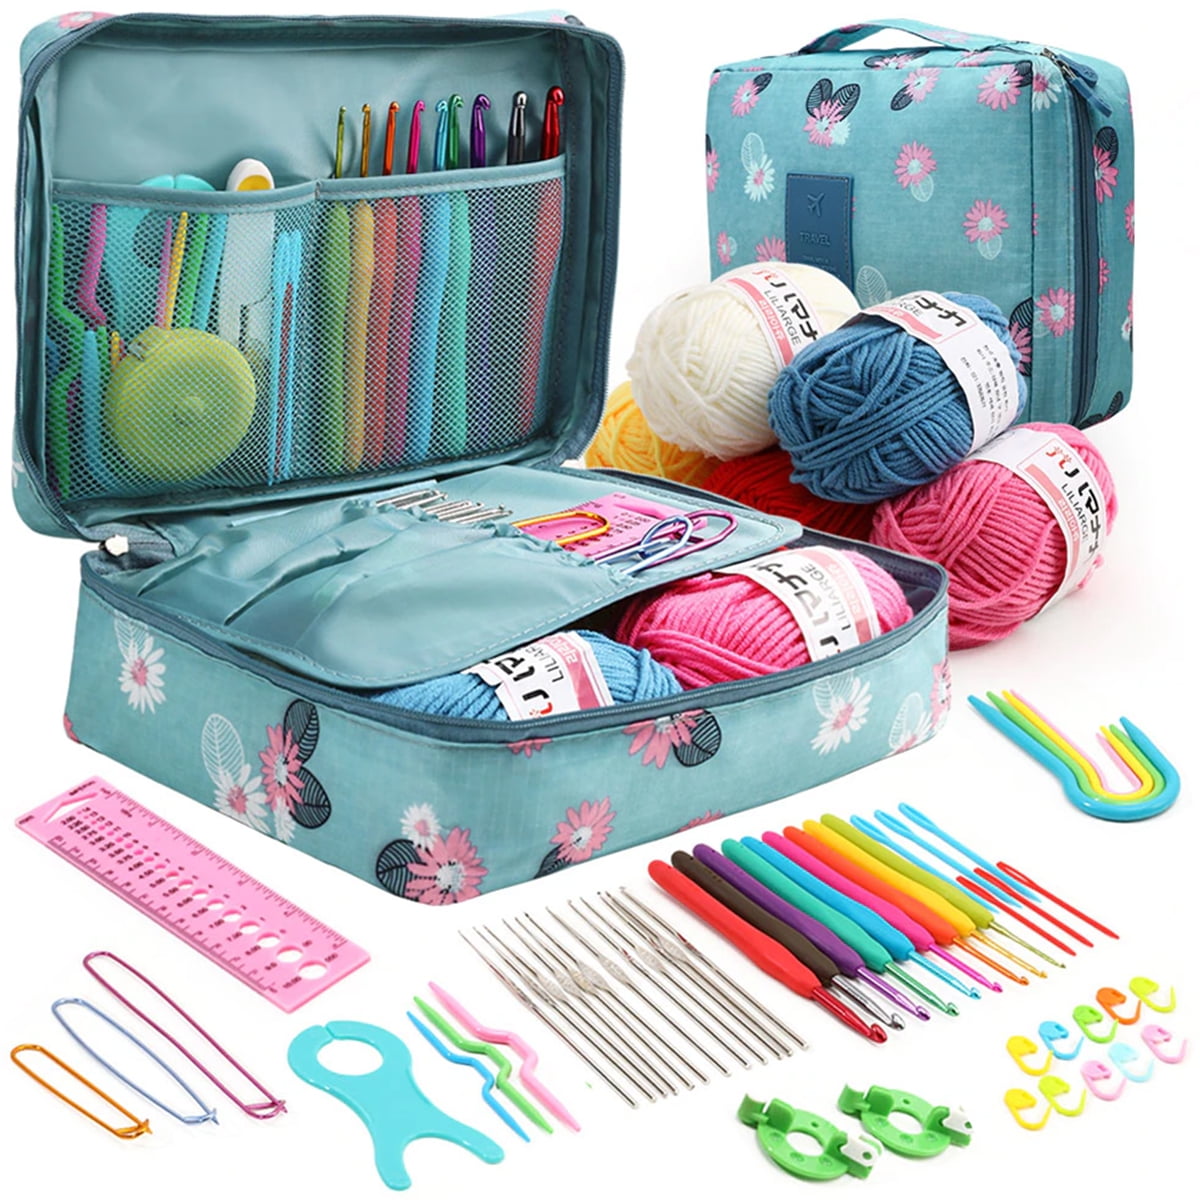 59pcs/set Beginner Adult Crochet Kit With 0.6mm-6mm Metal Hooks, Yarns,  Needles, Knitting Accessories And Storage Bag, Pink Crochet Starter Kit